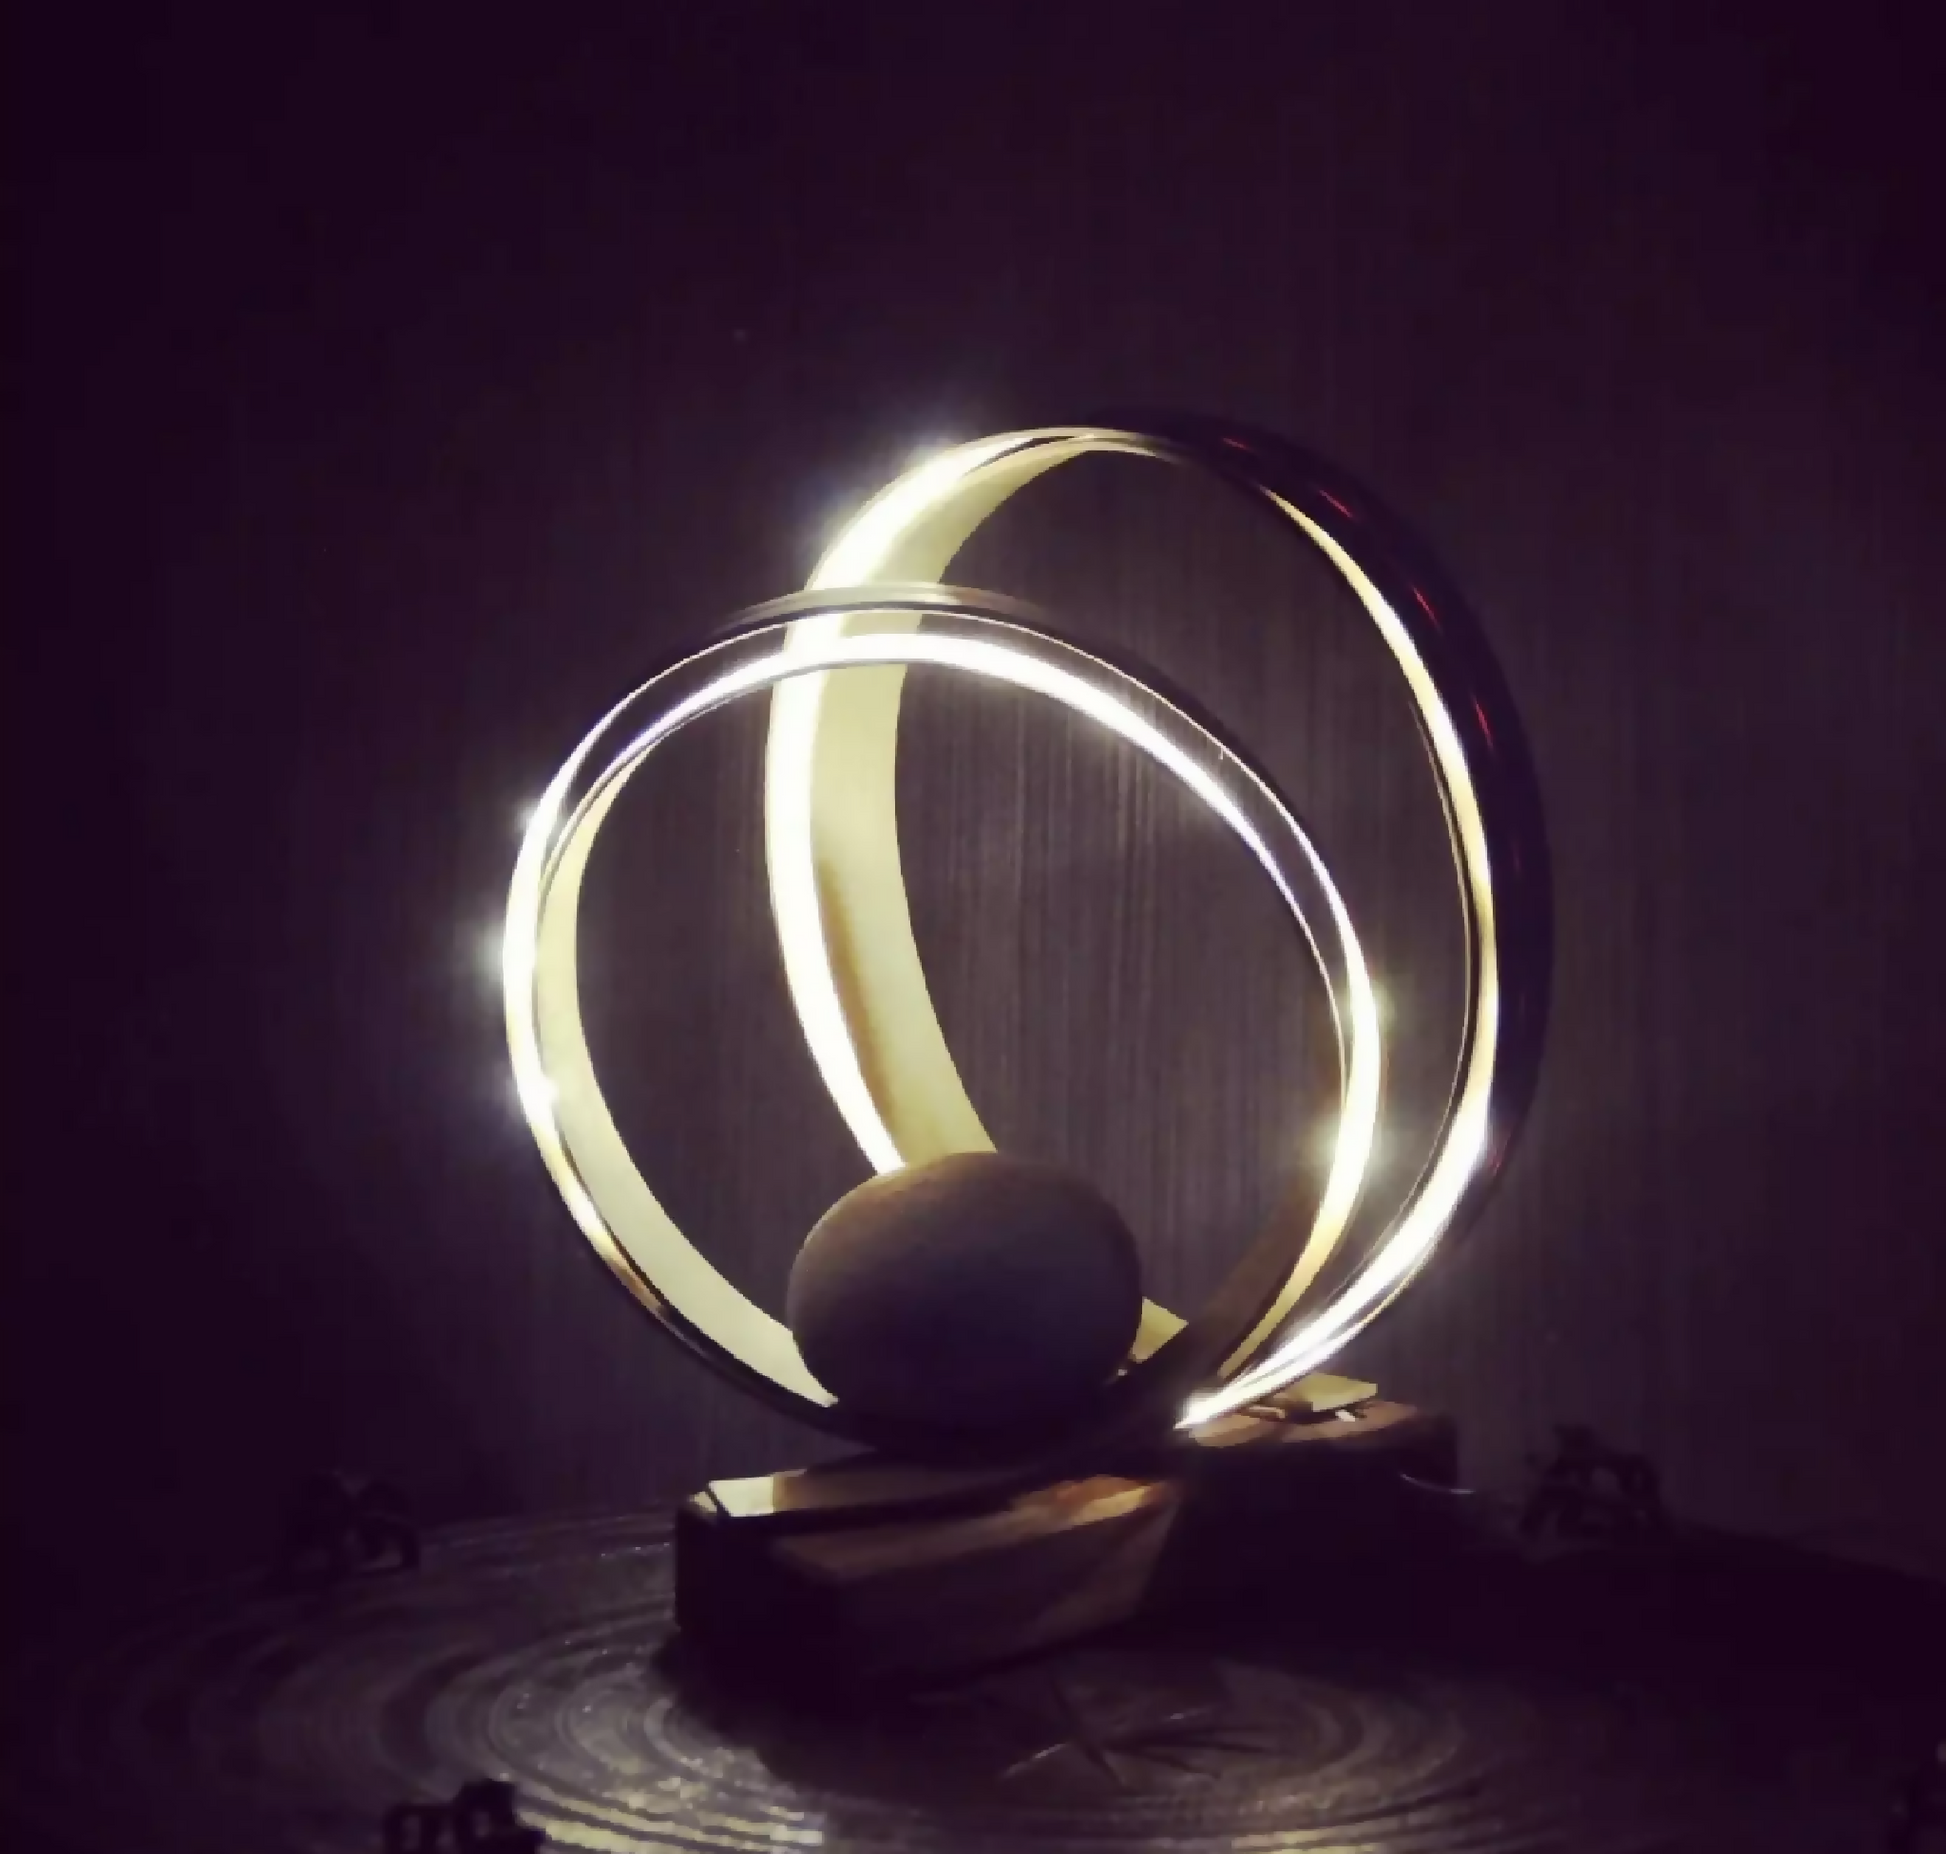 Luminaire spiral artisanal en bois sculpte fait main artisanat francais